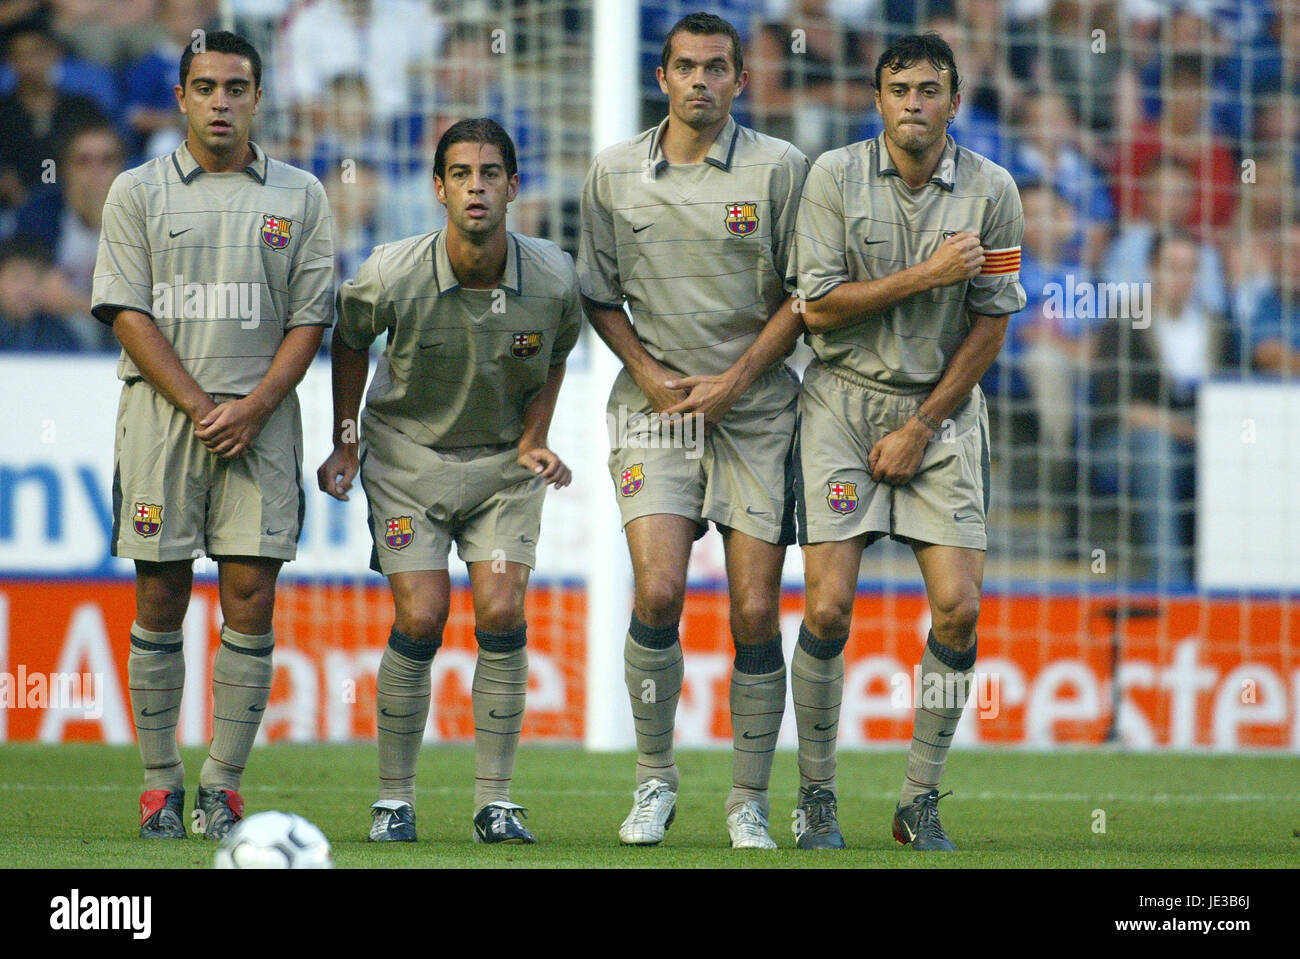 XAVI LOPEZ COCU & ENRIQUE FC BARCELONA WALKERS STADIUM LEICESTER ENGLAND 08  August 2003 Stock Photo - Alamy